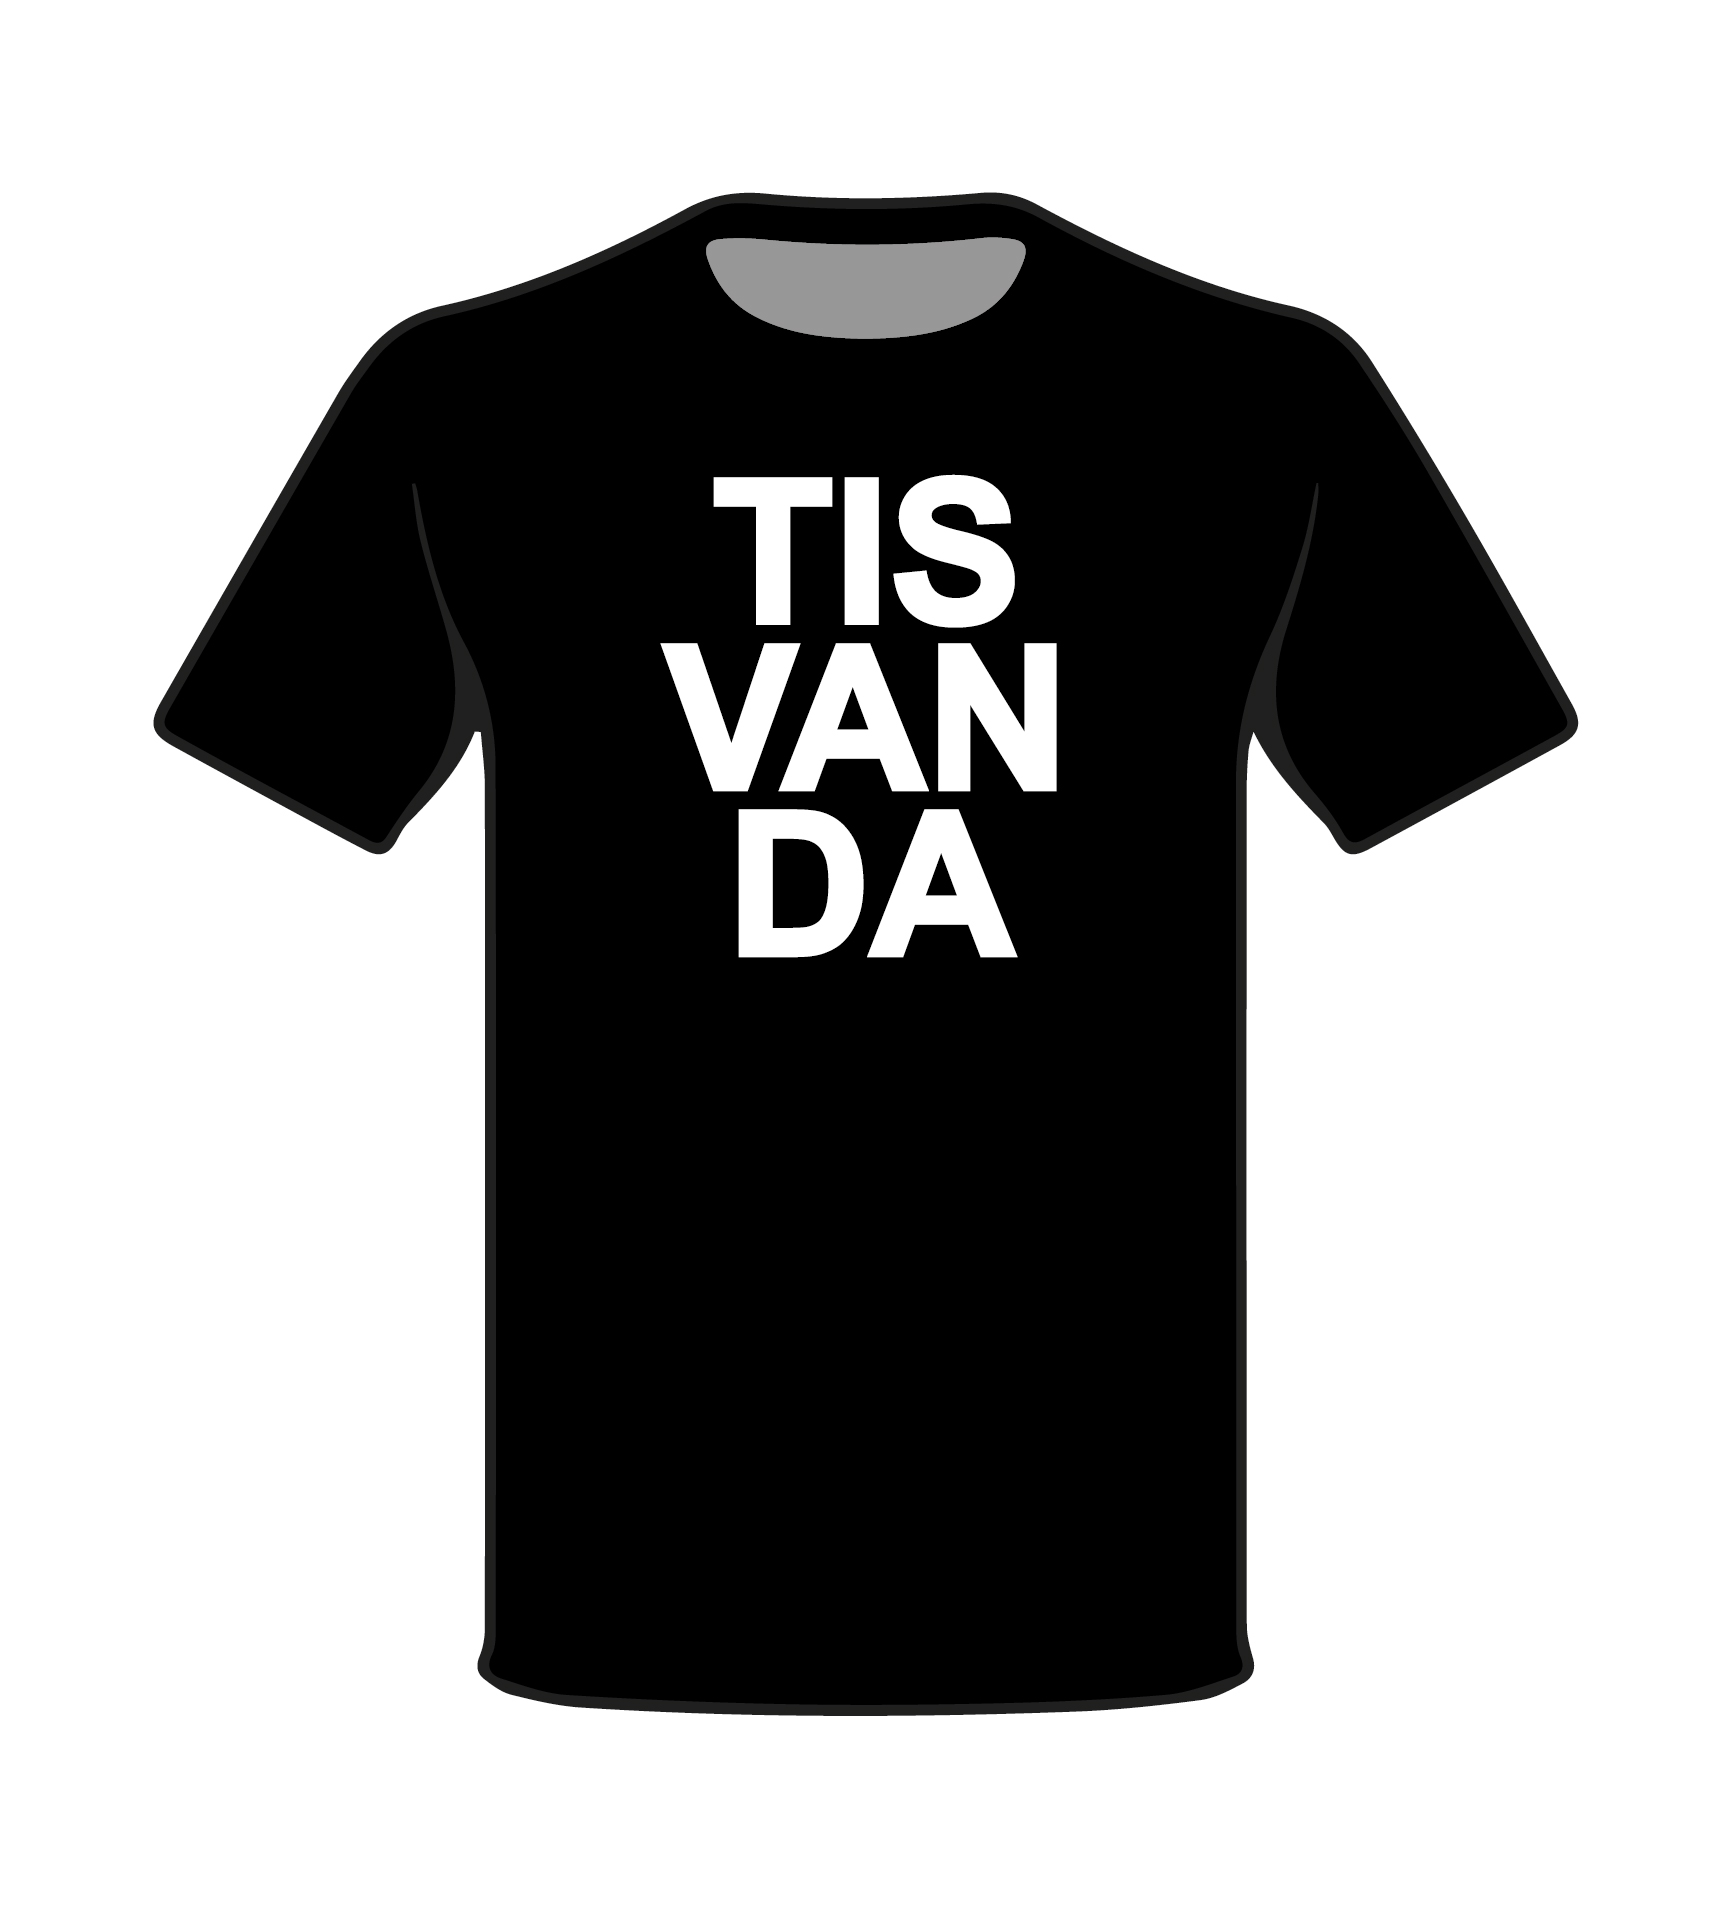 tisvanda-shirt-black